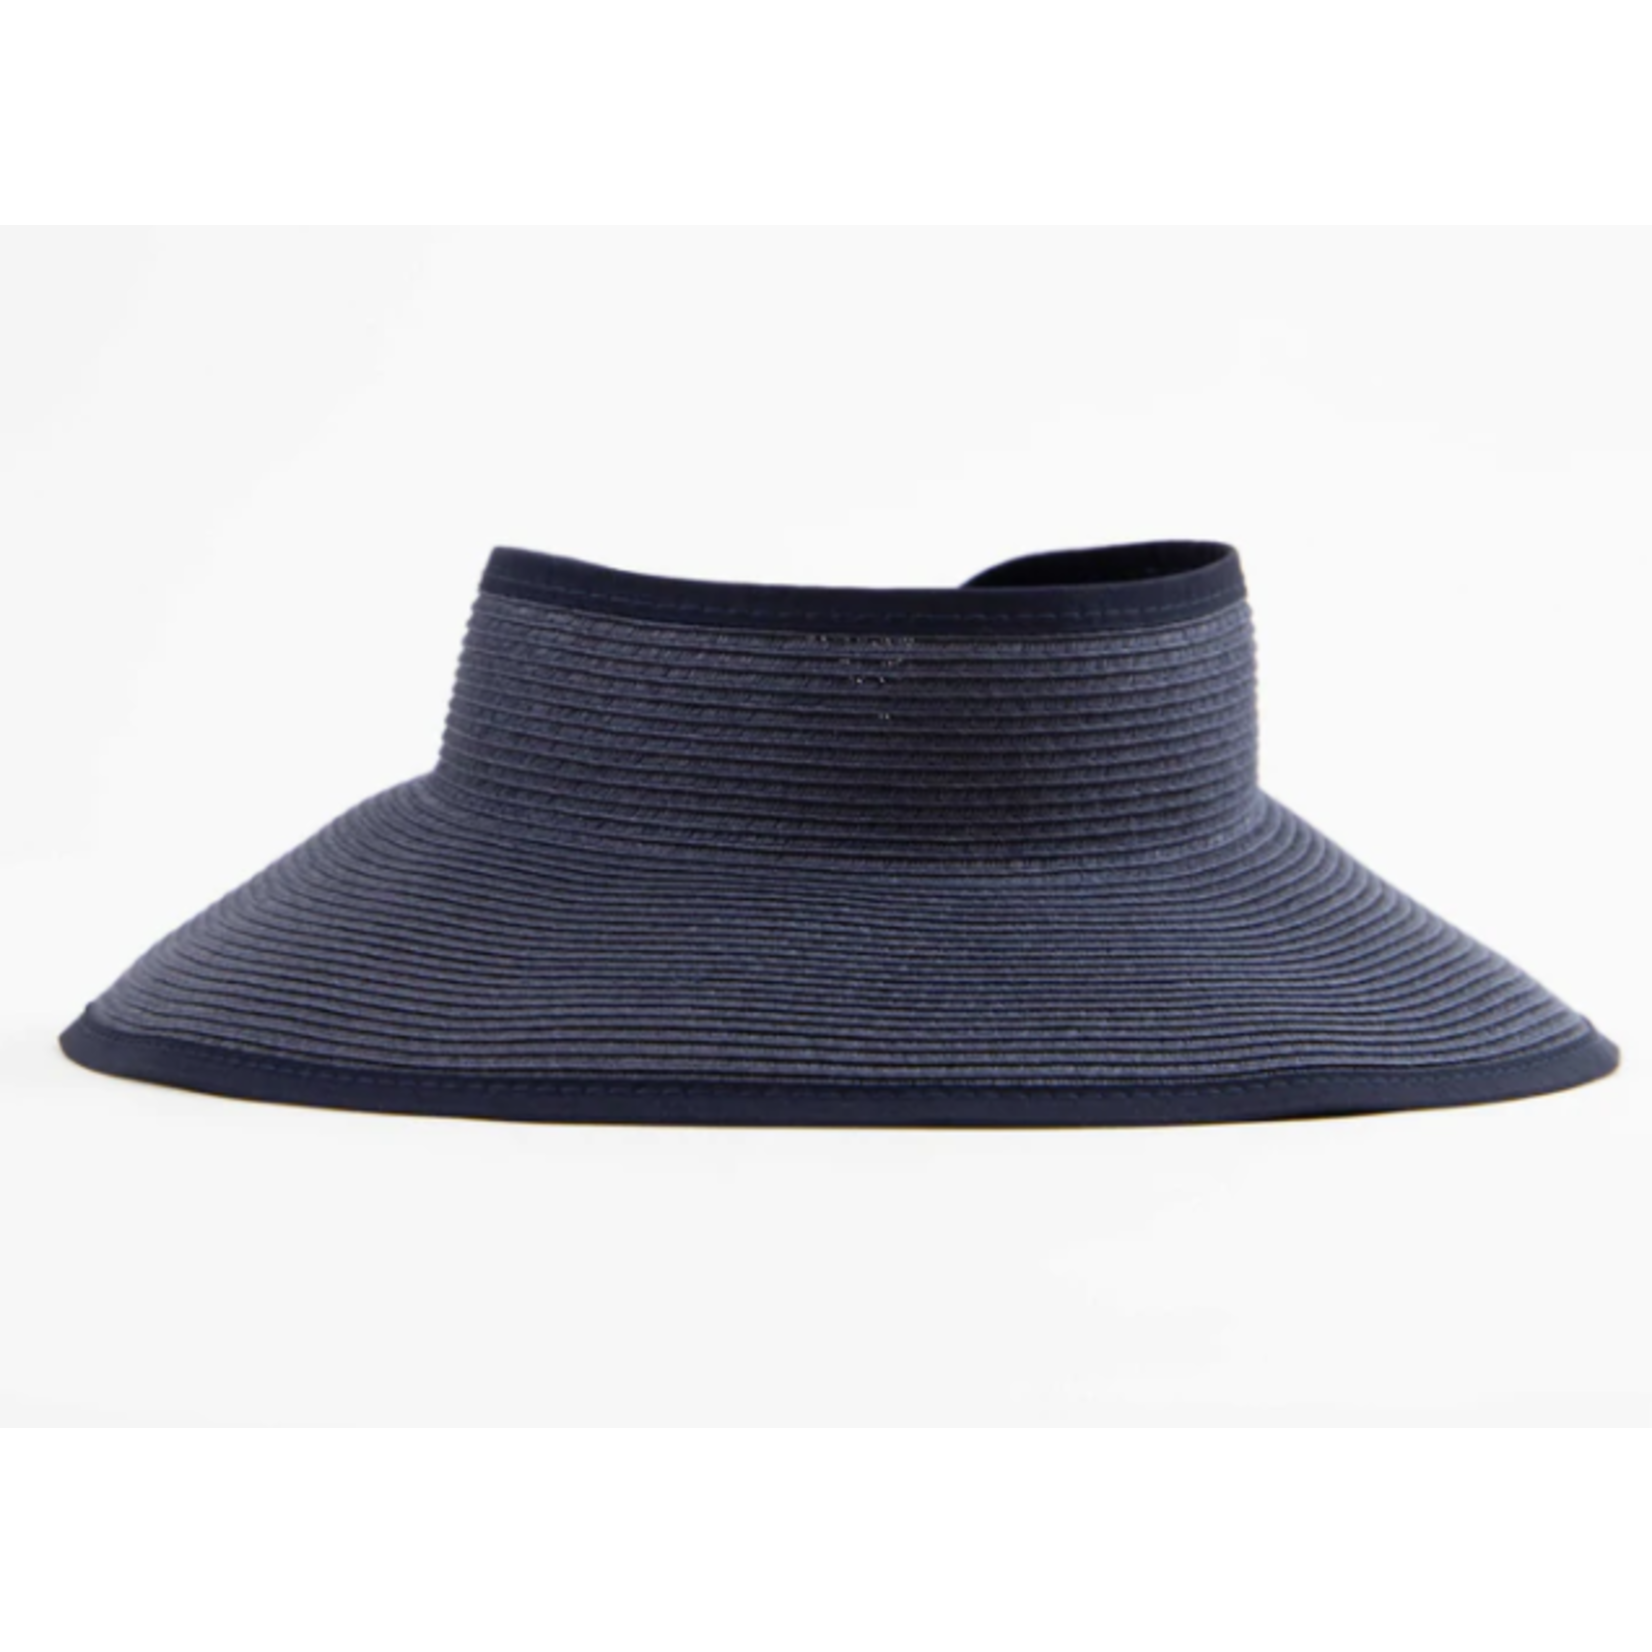 Ultrabraid Large Brim Visor Hat in Navy : San Diego Hat Co - Exit9 Gift  Emporium